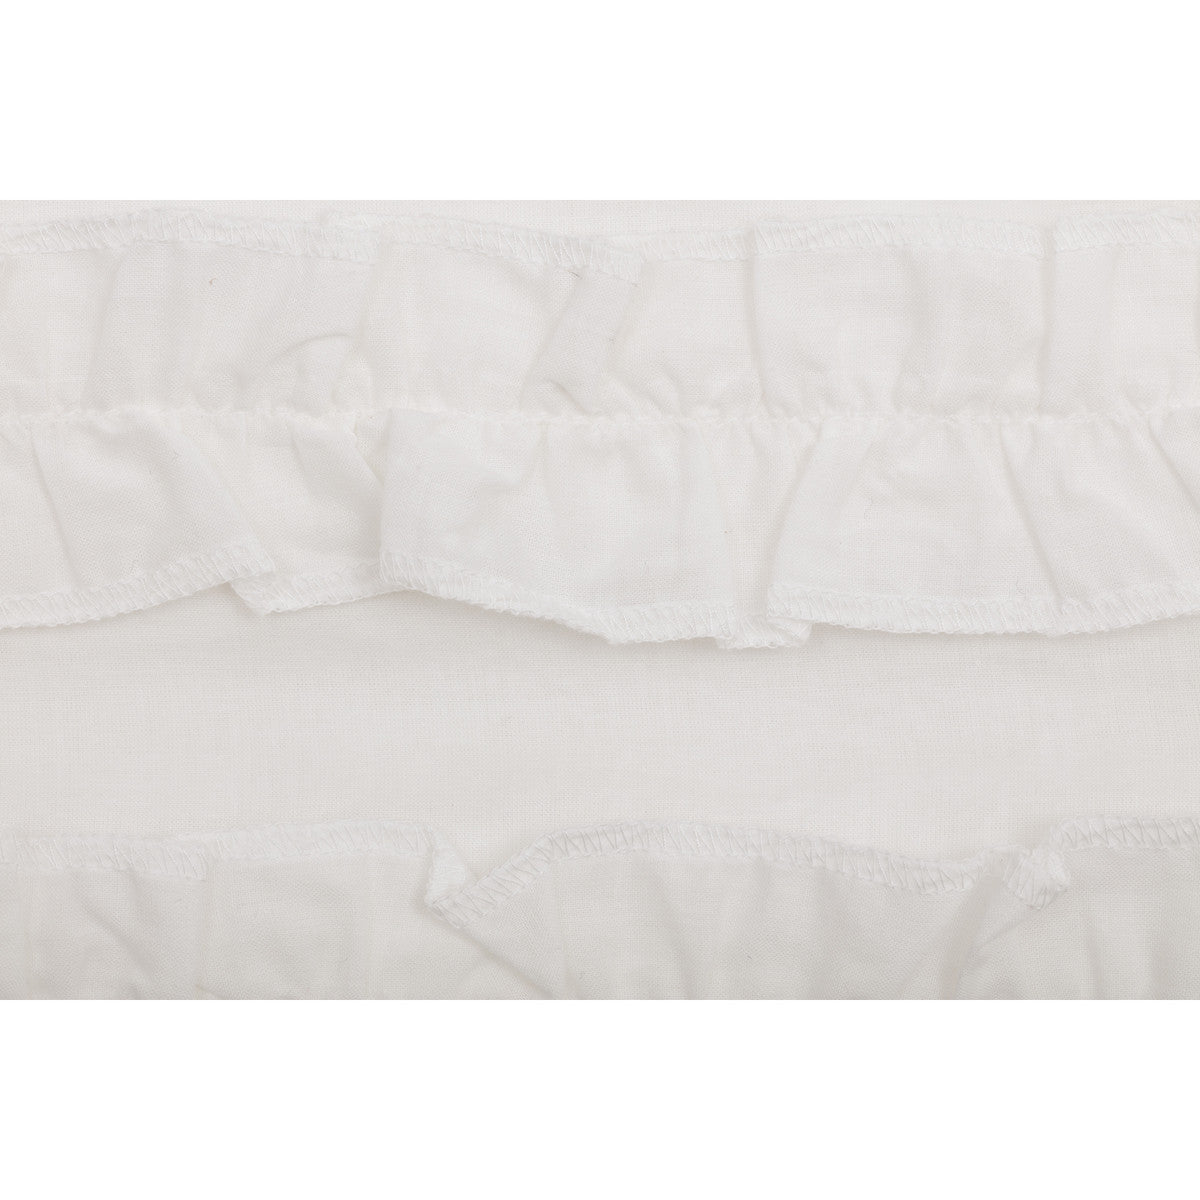 White Ruffled Sheer Petticoat Prairie Long Panel Set of 2 84x36x18